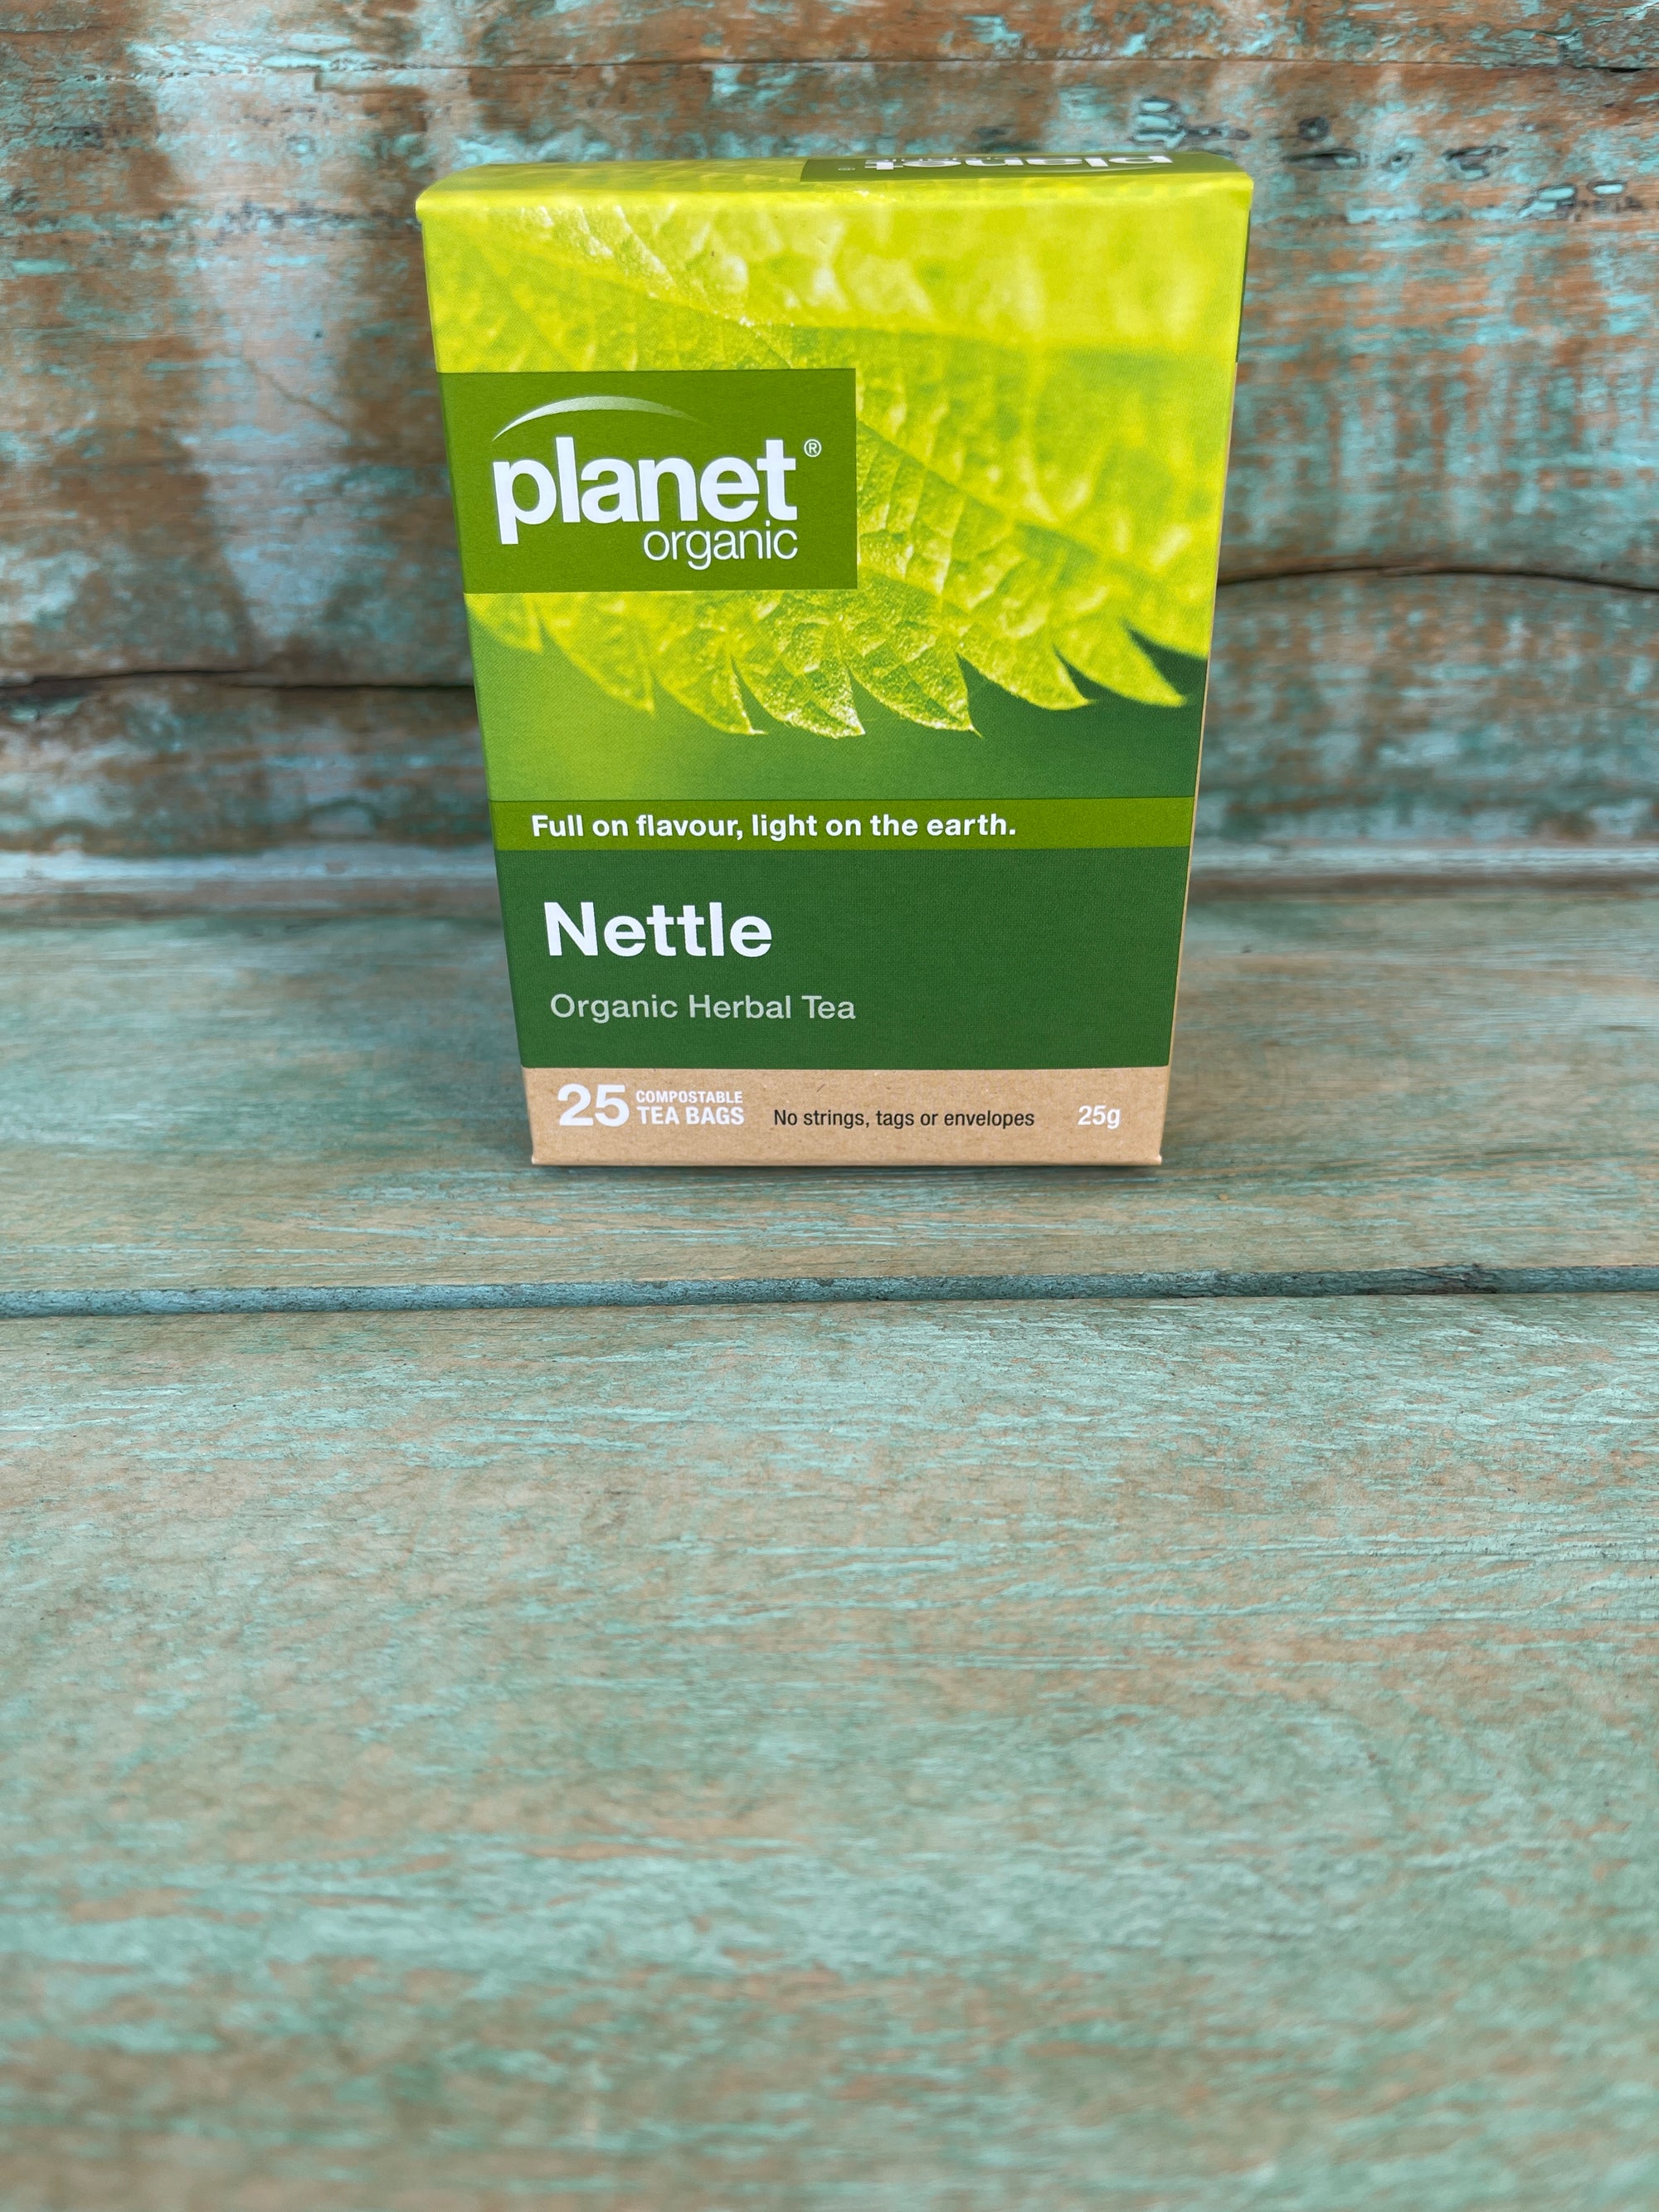 Planet Organic Nettle Organic Herbal Tea